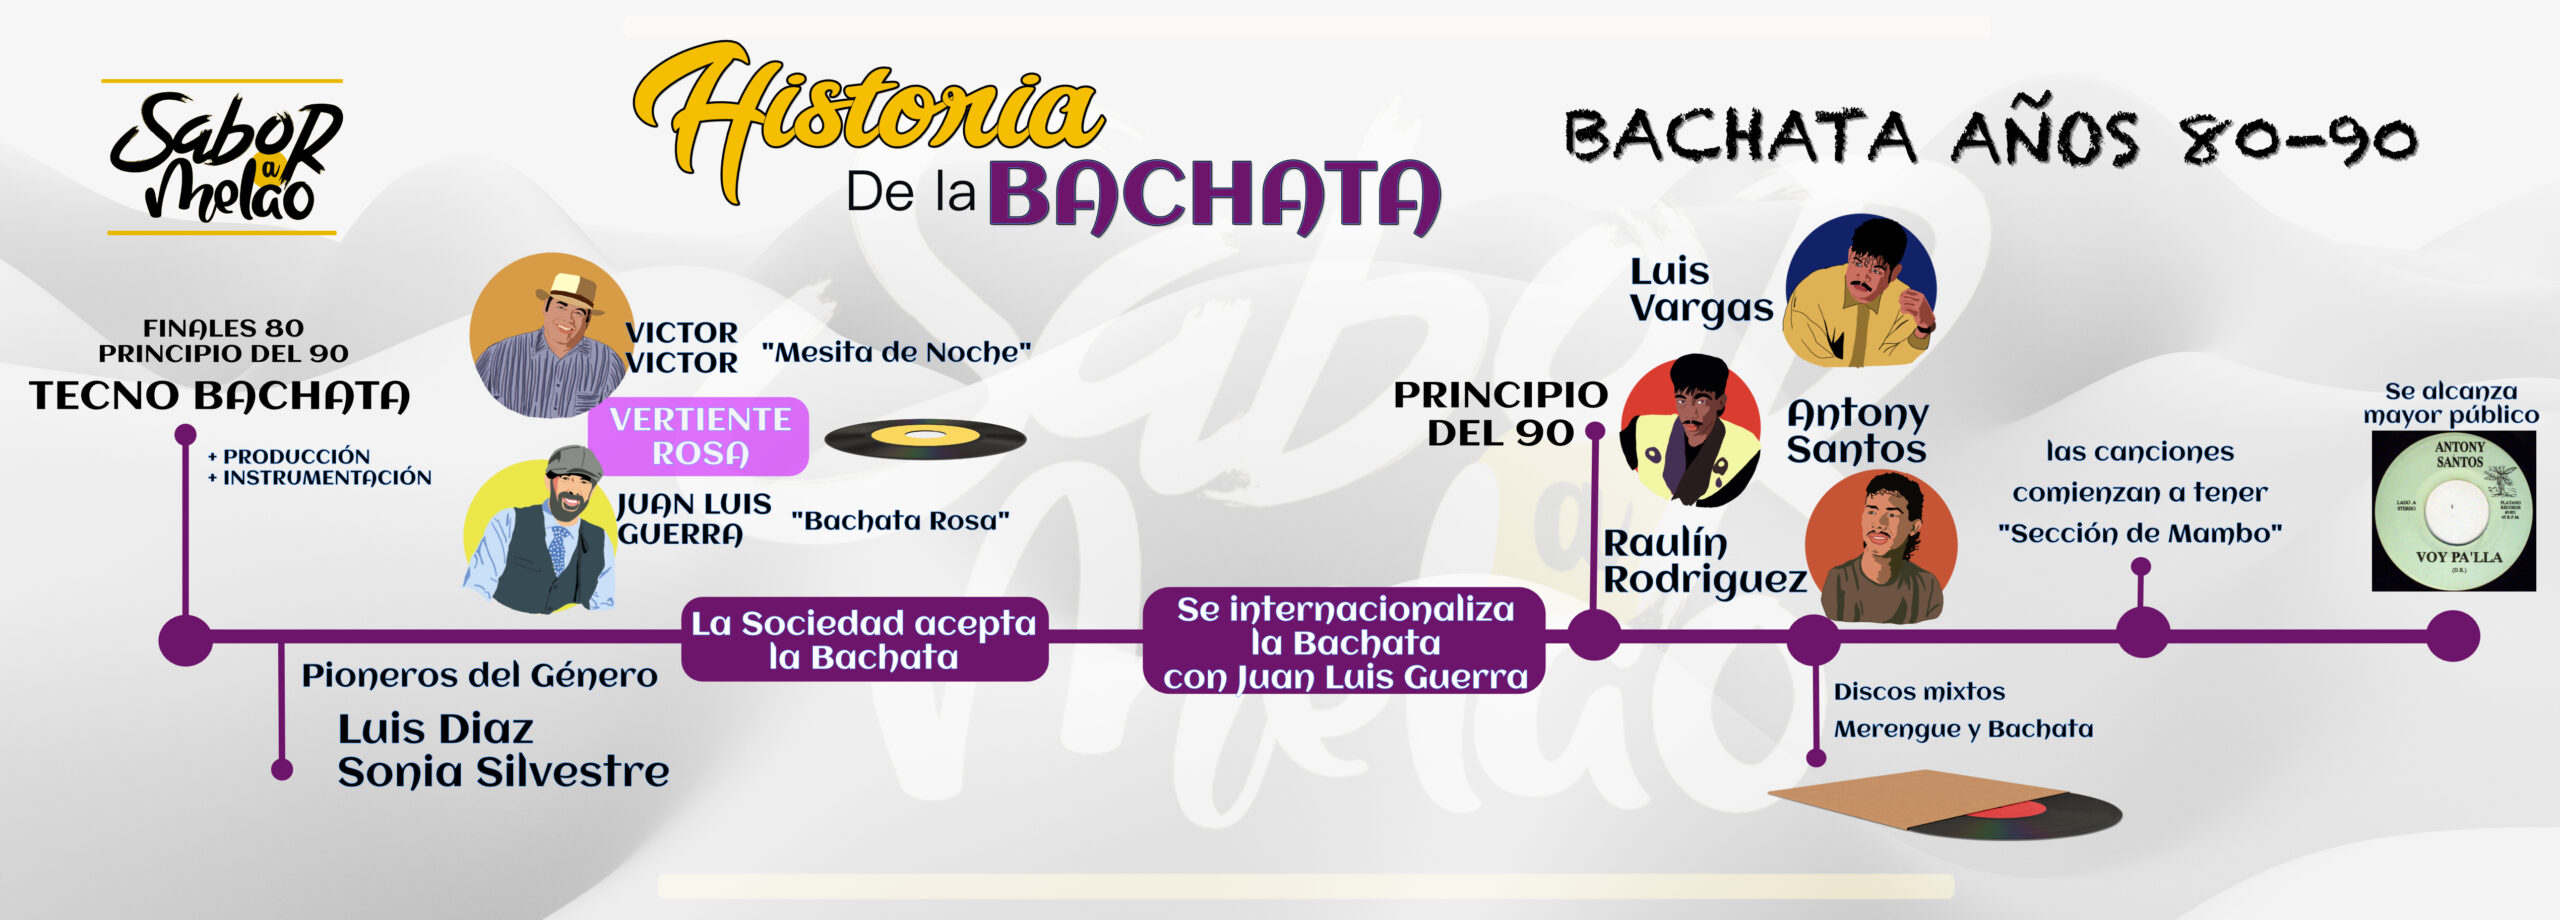 Historia de la bachata 80-90 - Saboramelao